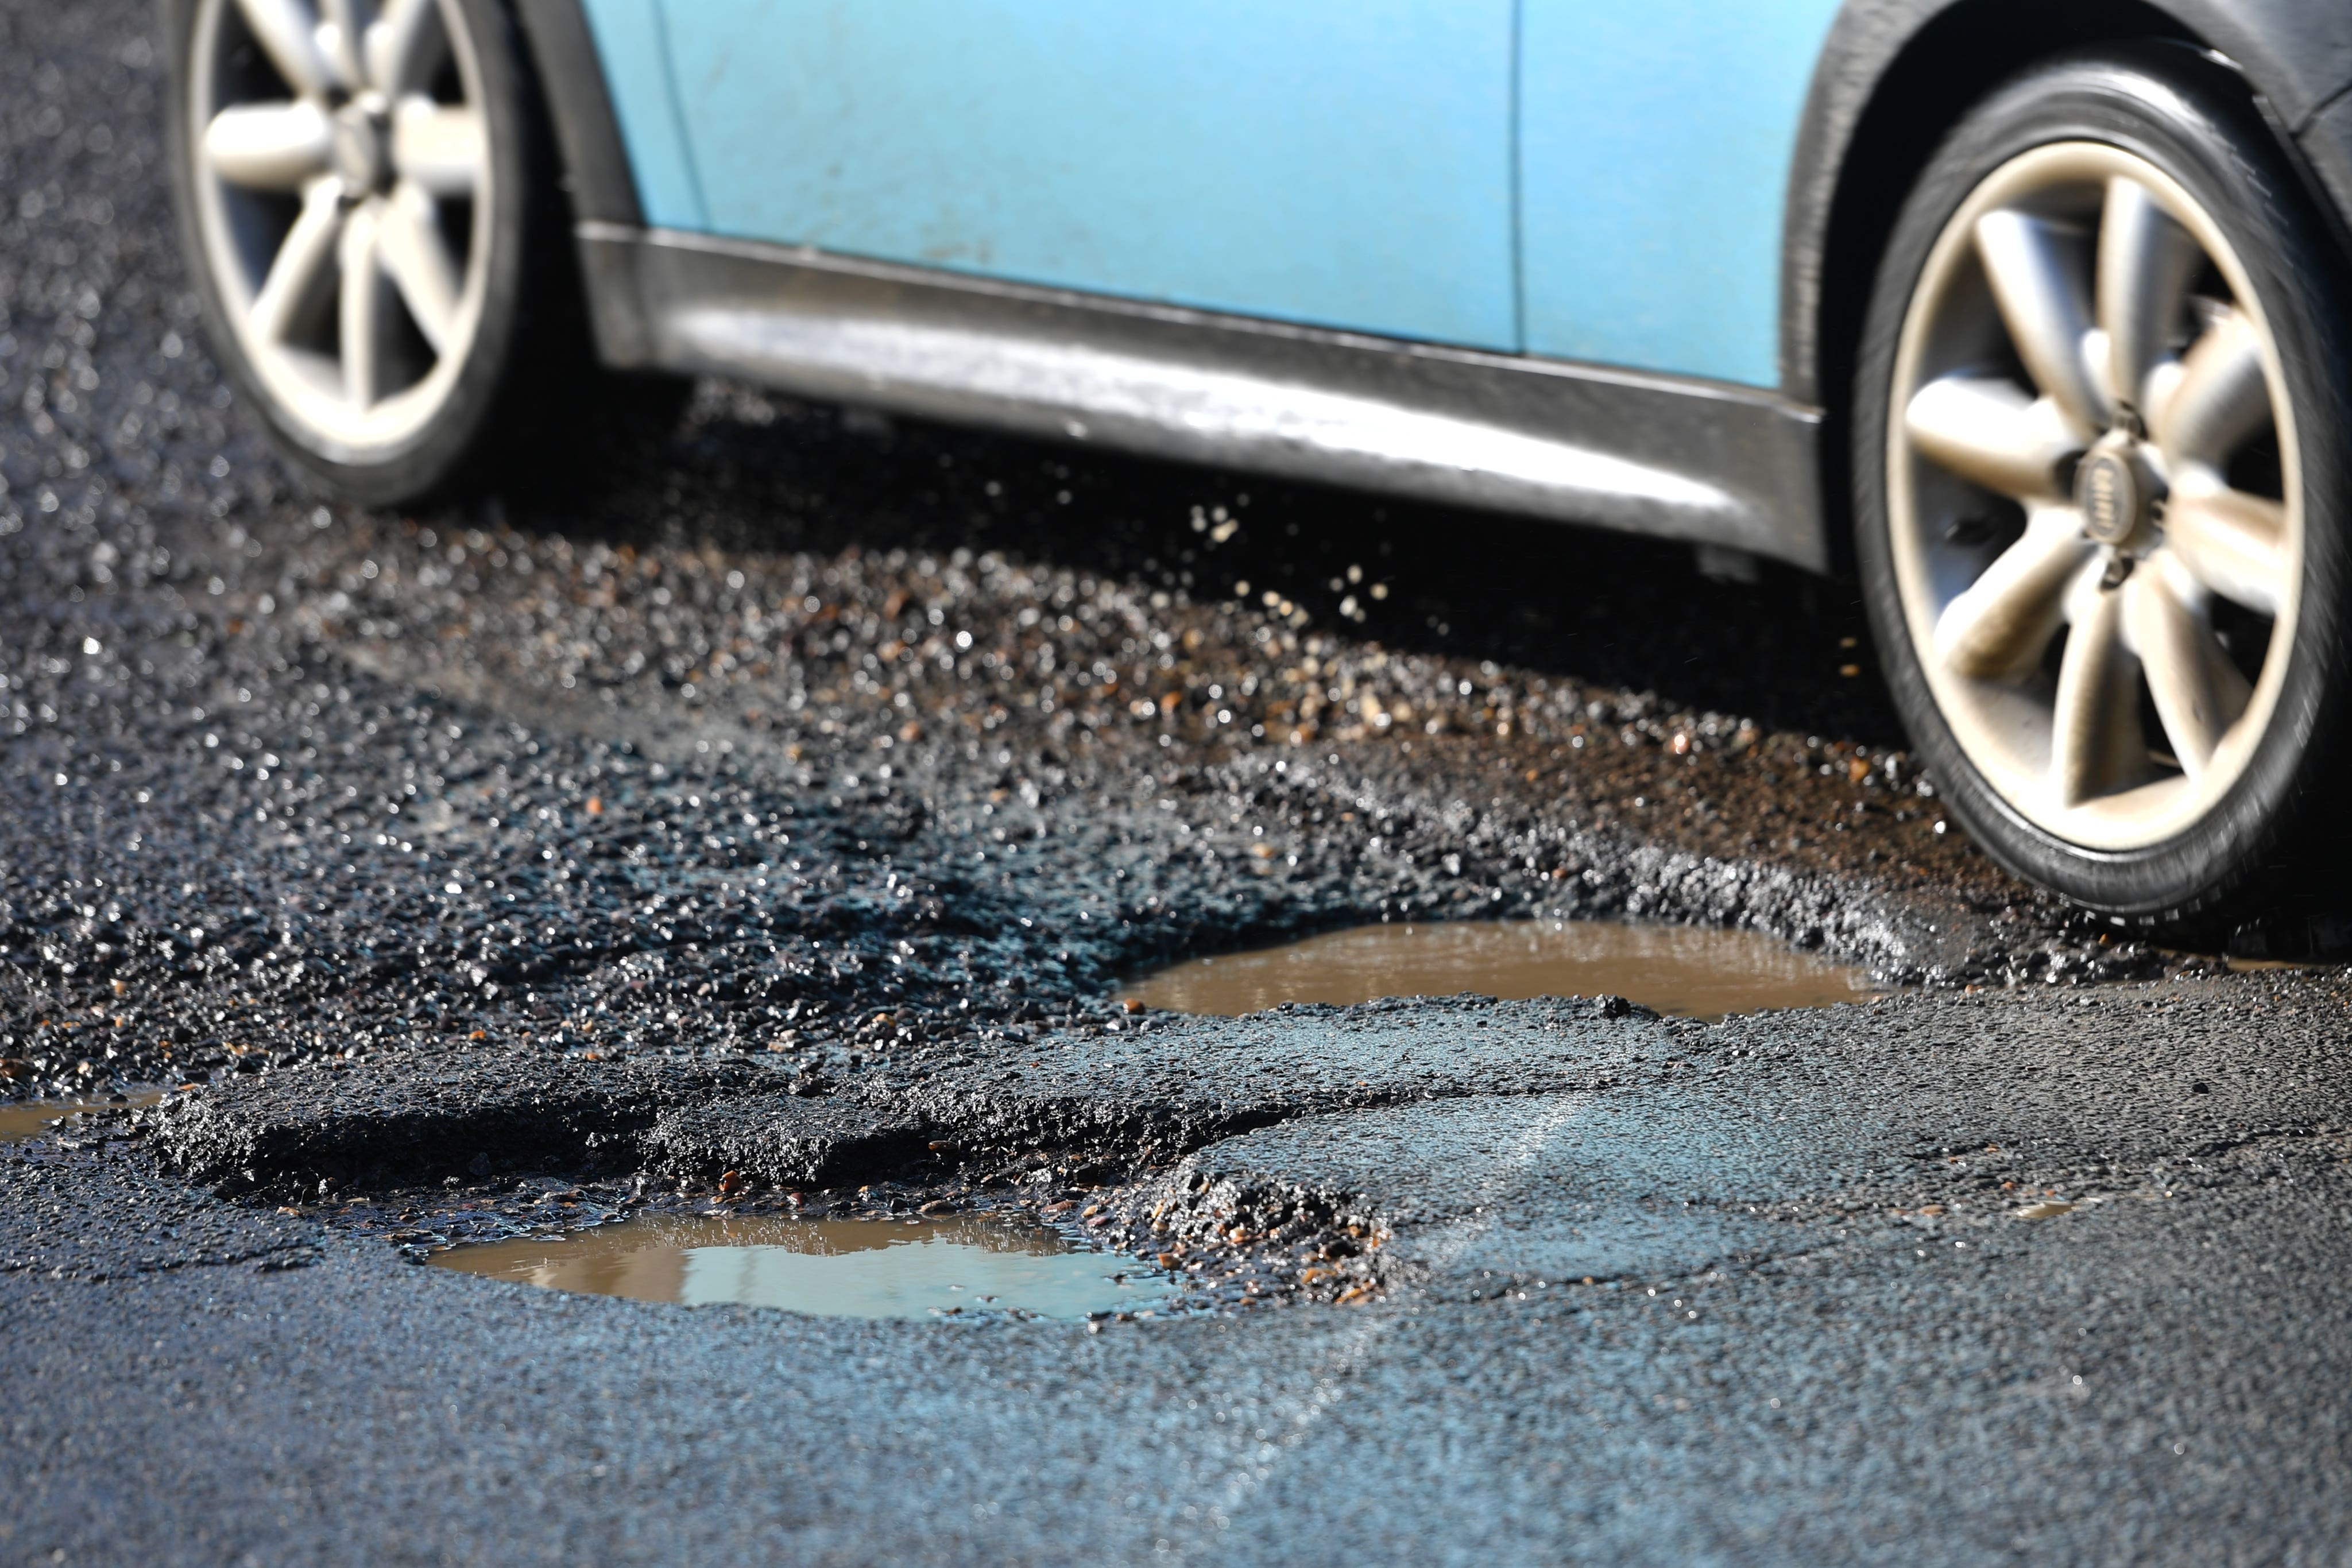 rac figures reveal the true impact of potholes on drivers